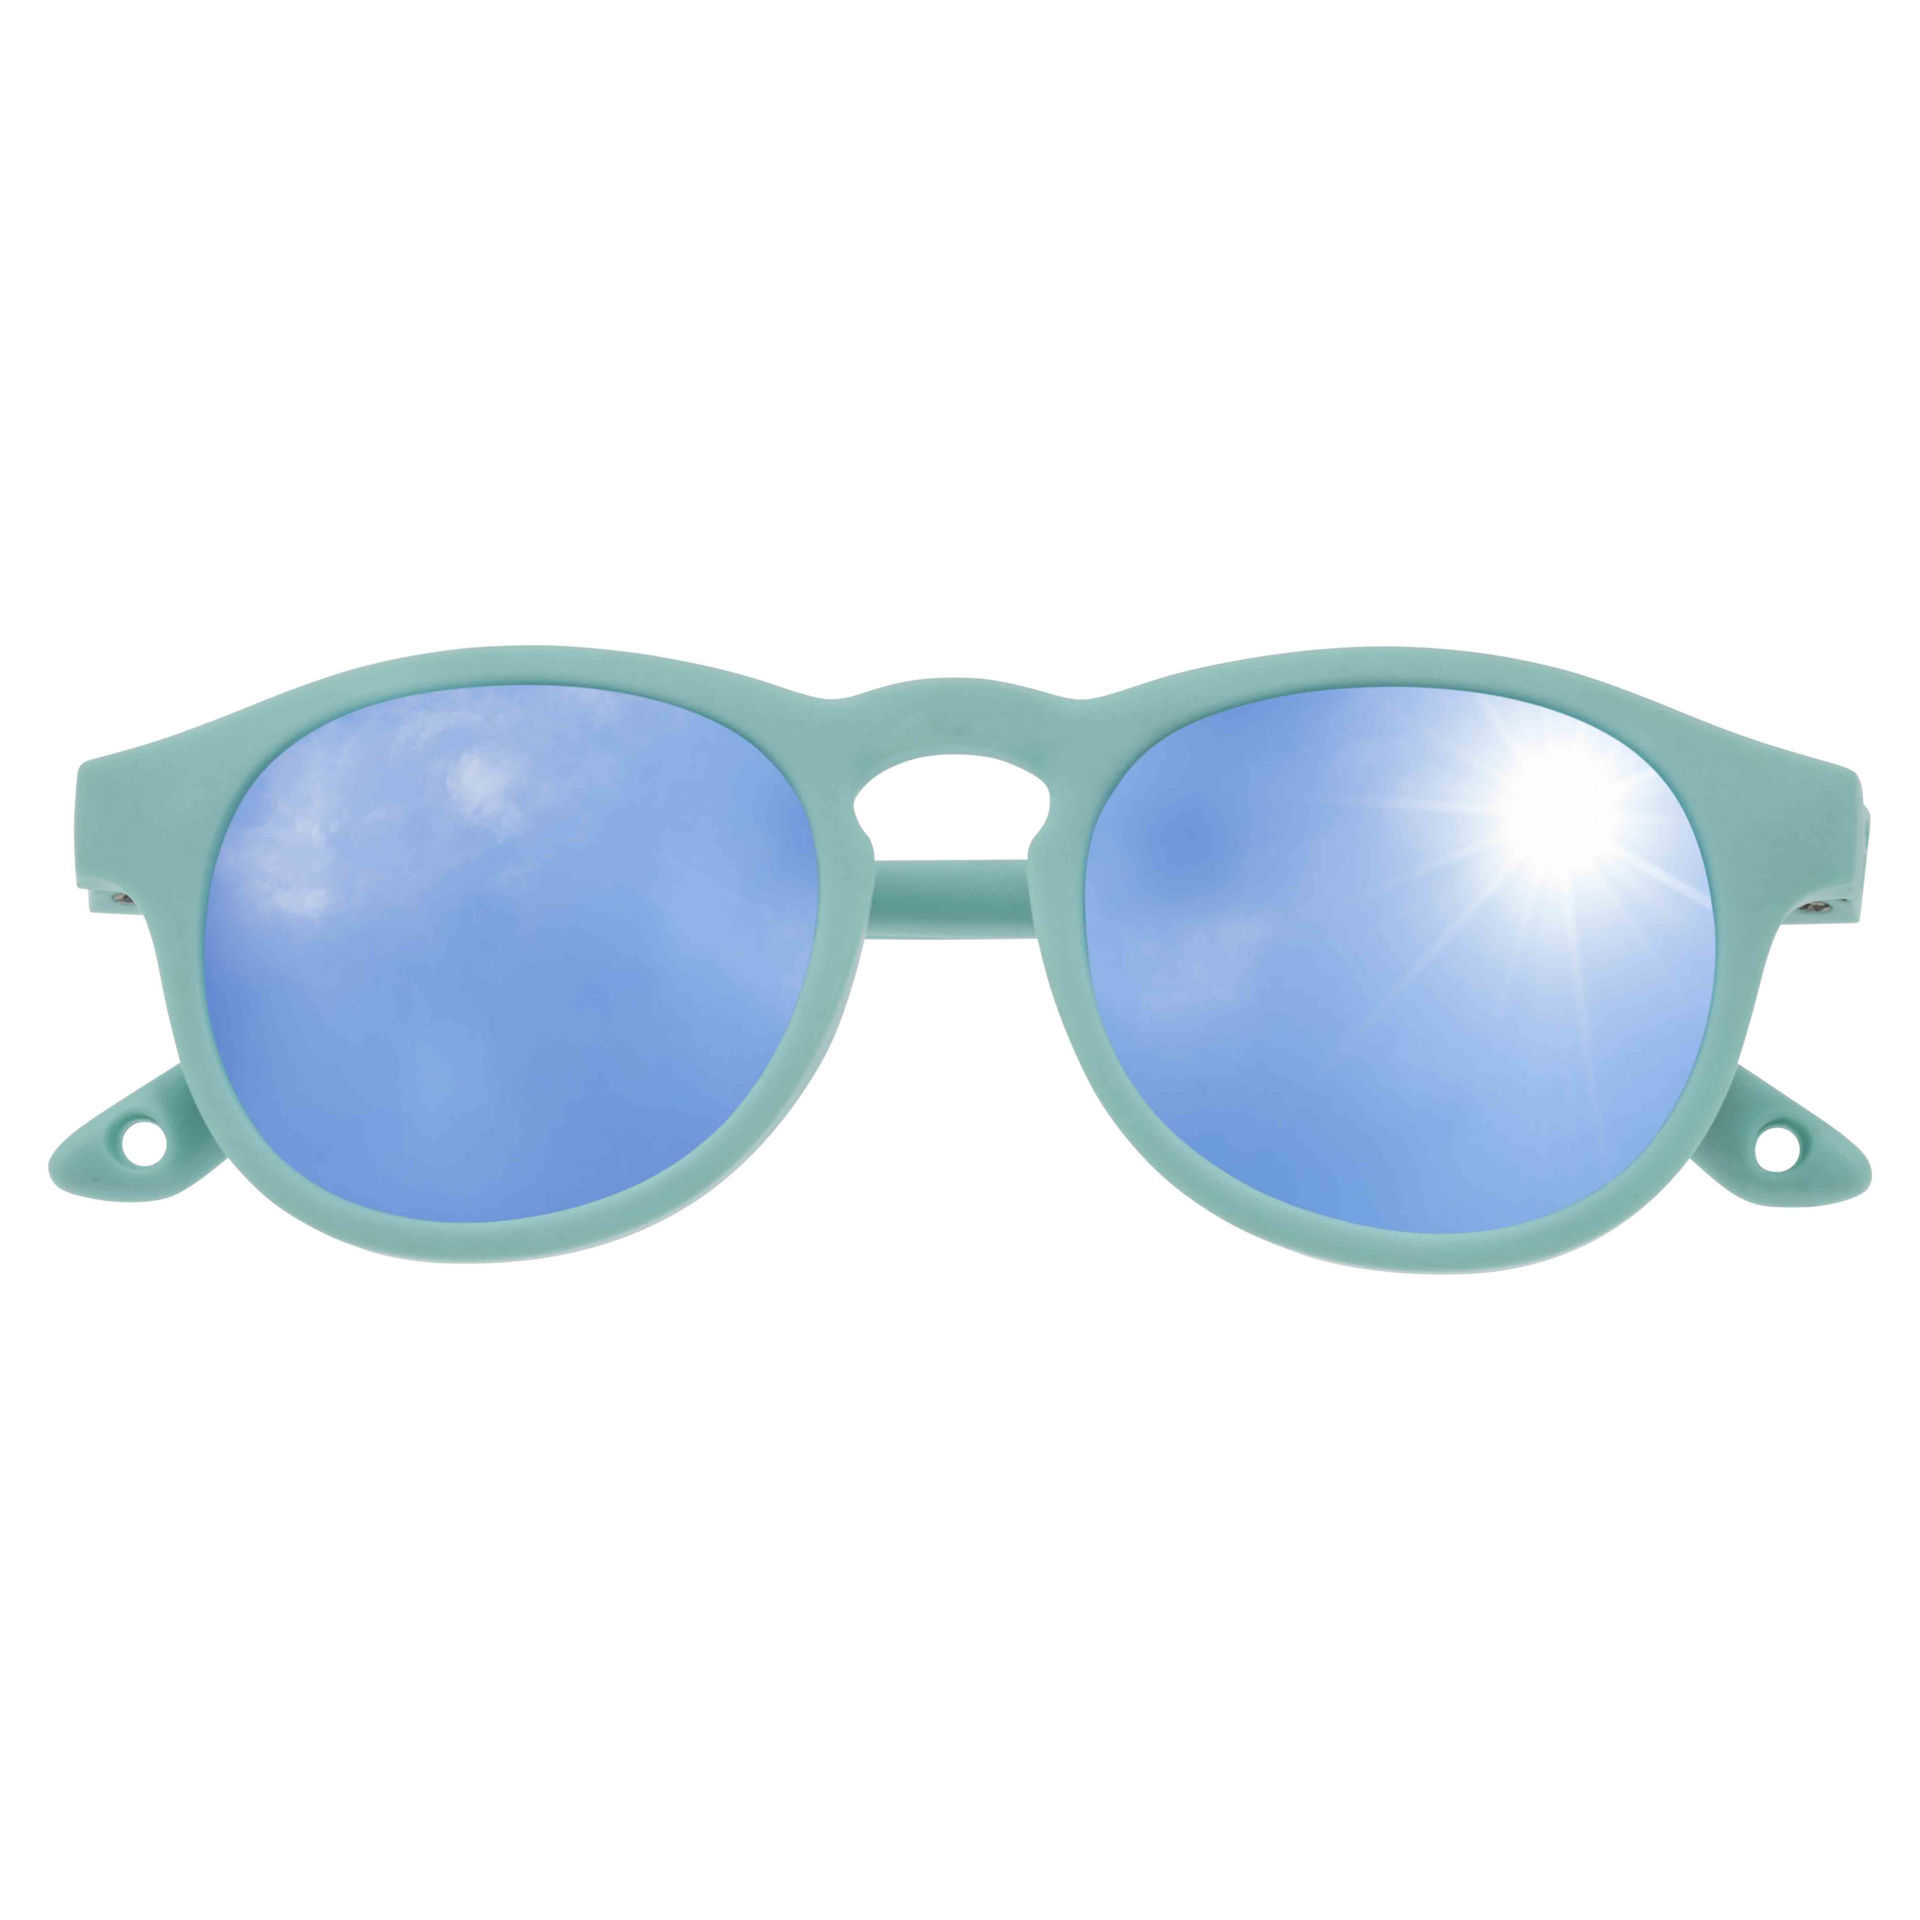 0003717_baby-sunglasses-hawaii-aqua-3-36-m